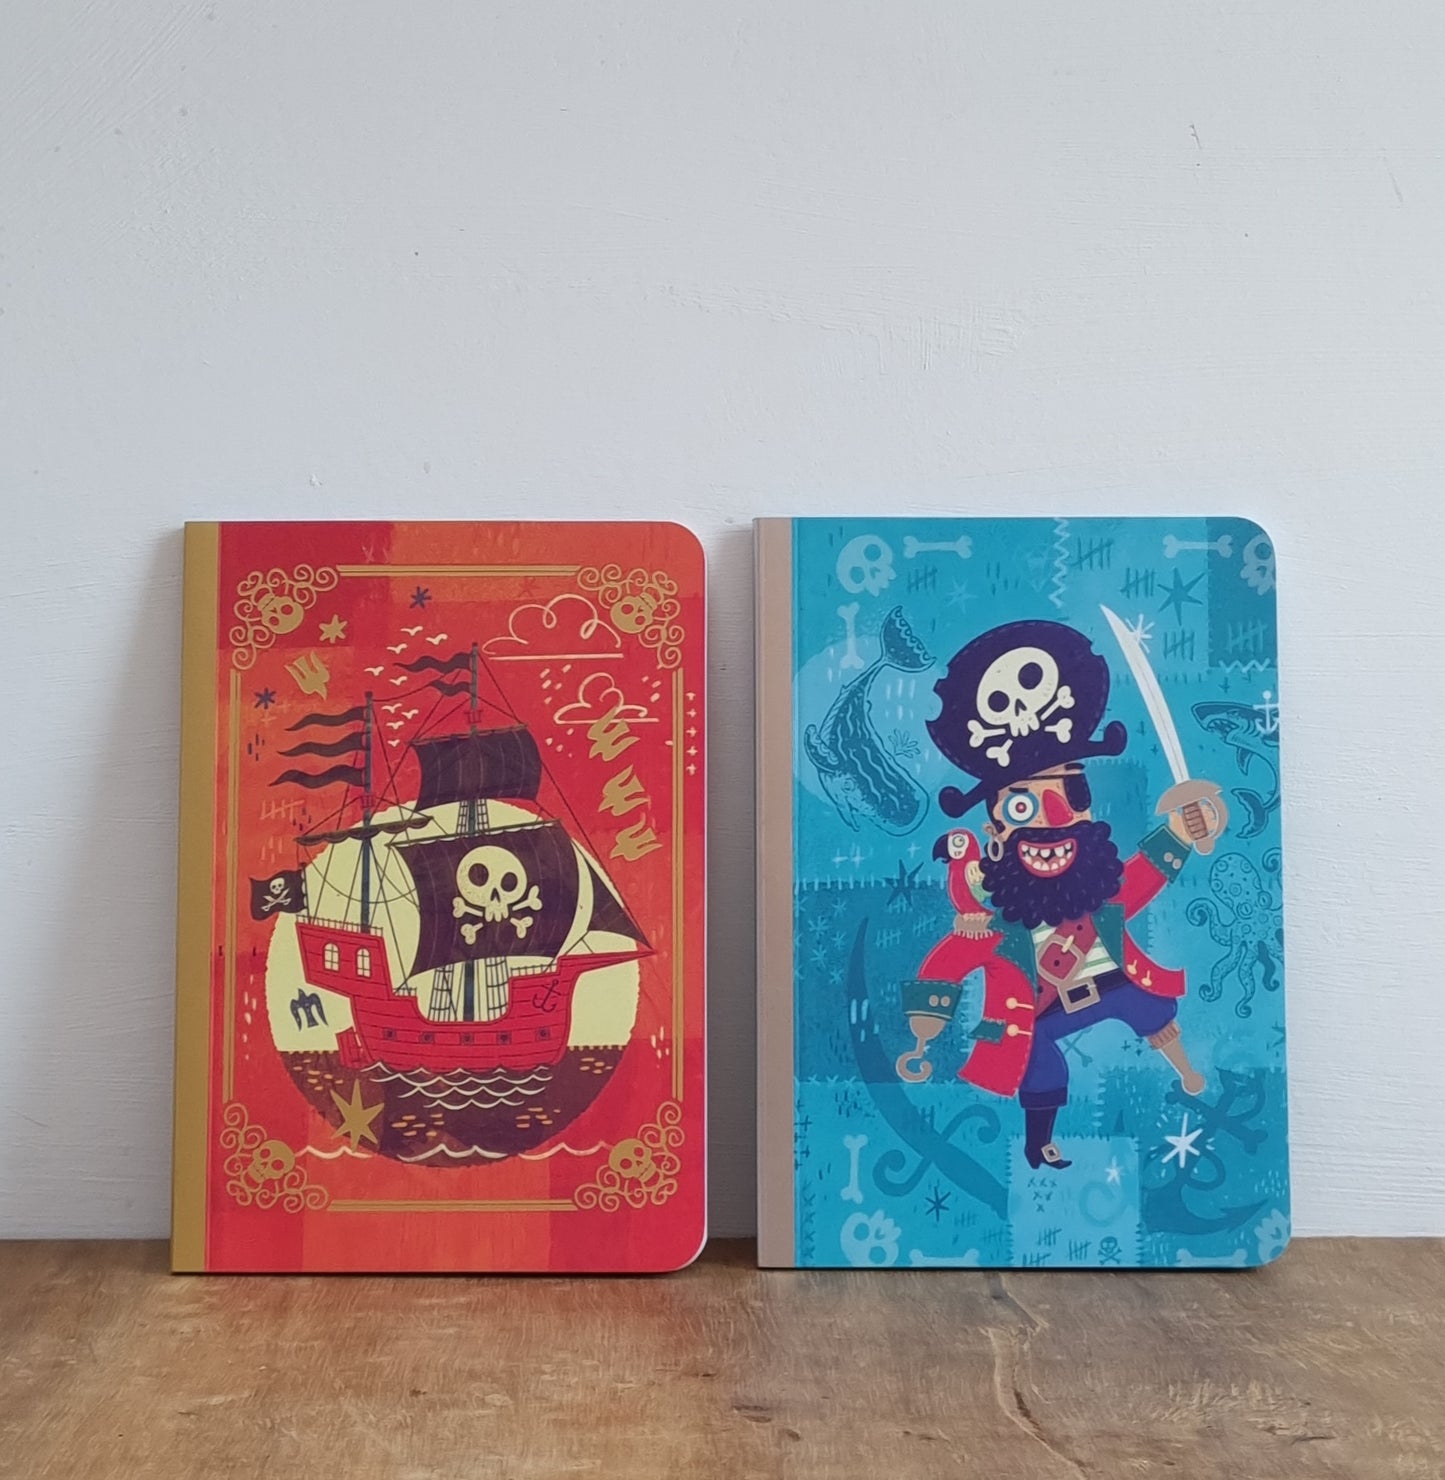 Pair of pirate books